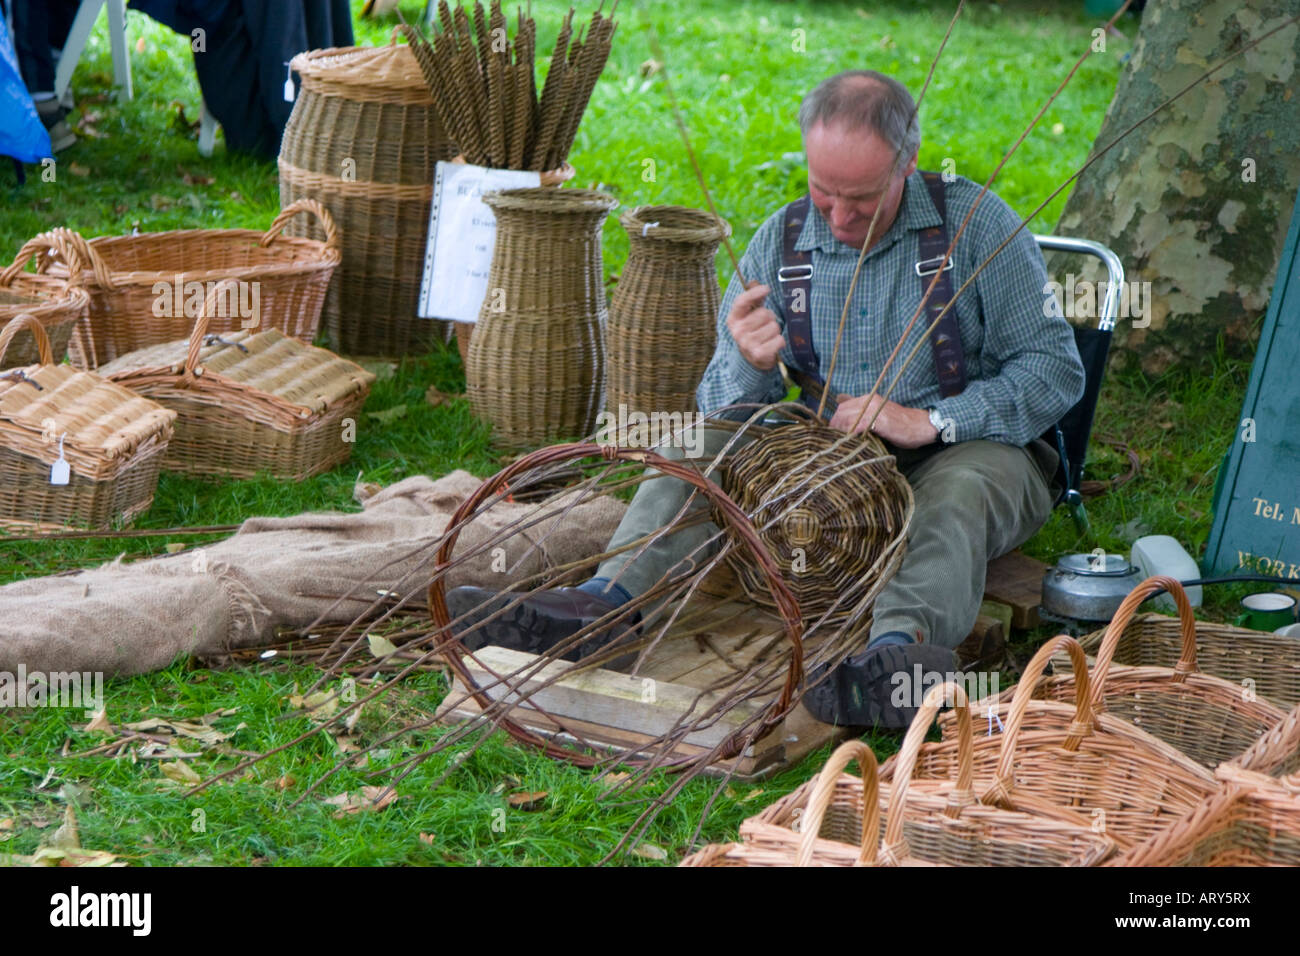 Basket weaver making a basket Stock Photo